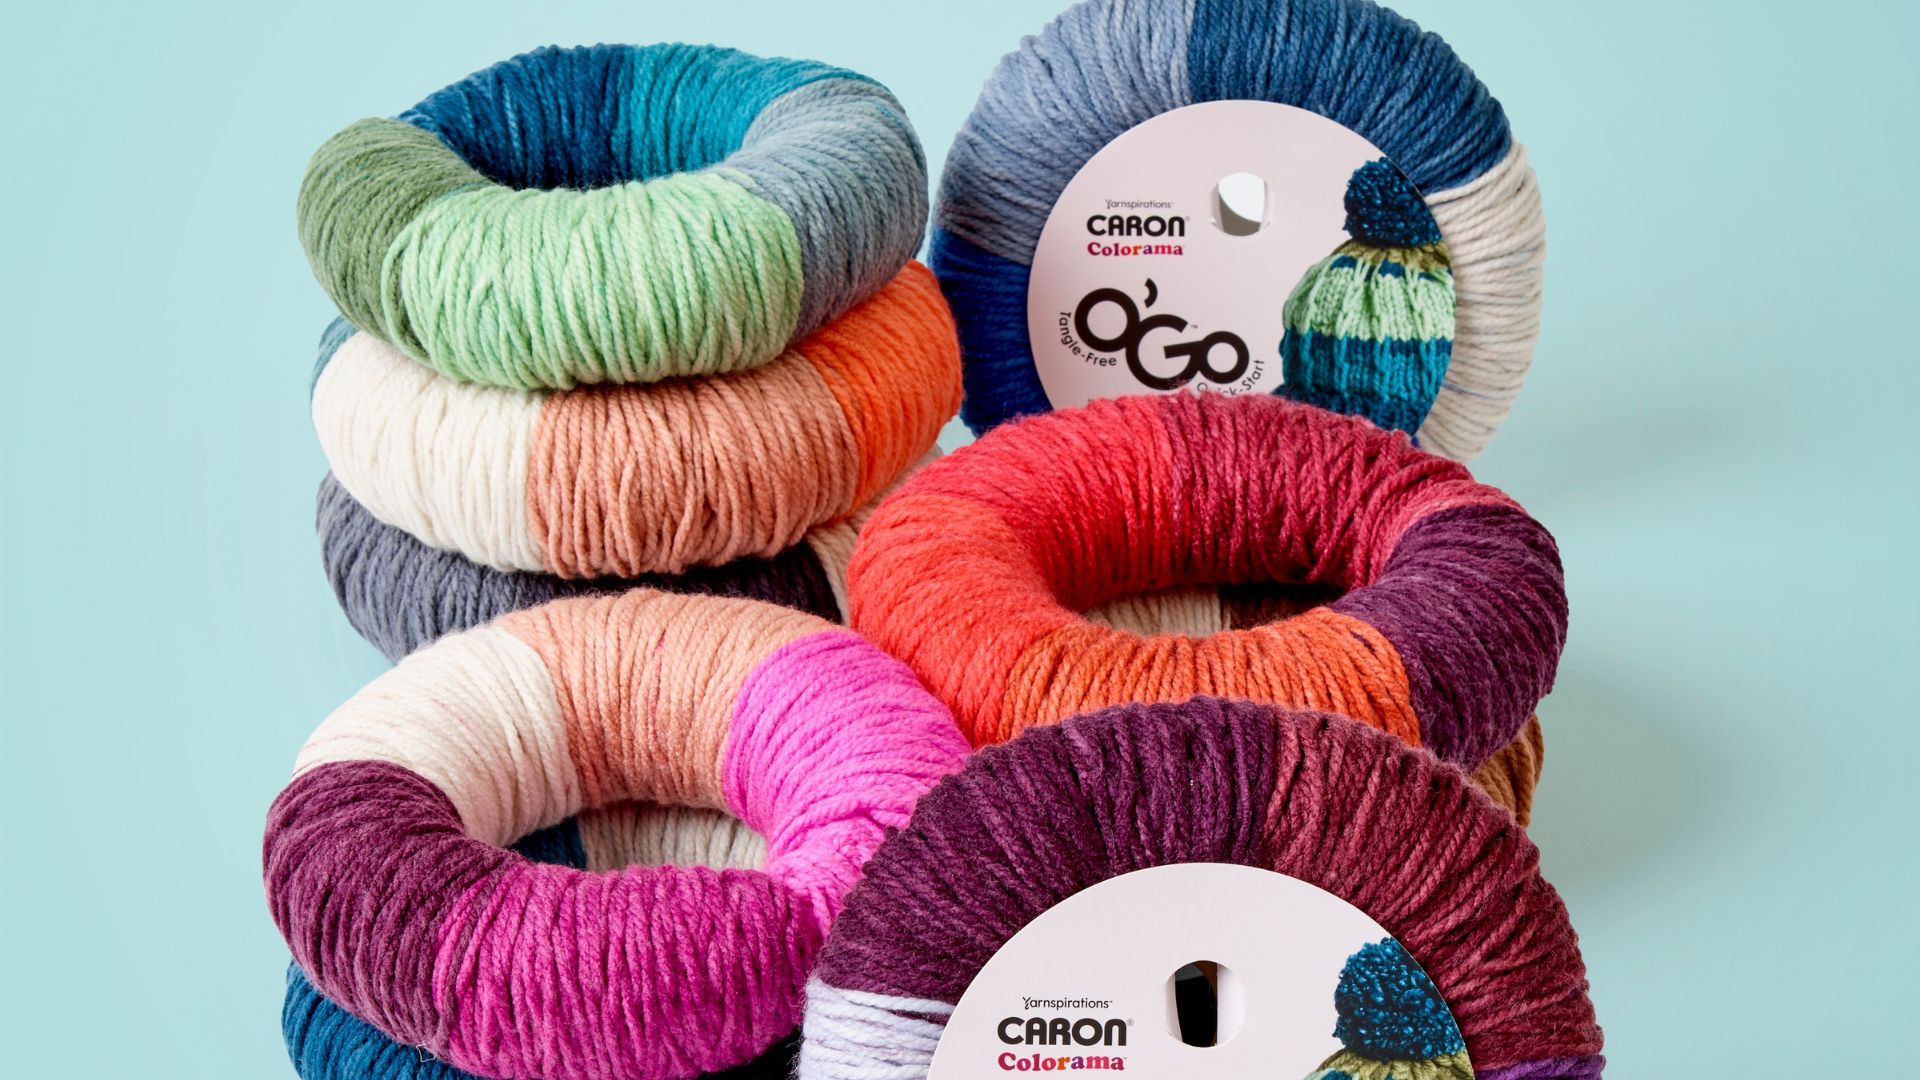 Introducing the Caron Ogo Yarn Range